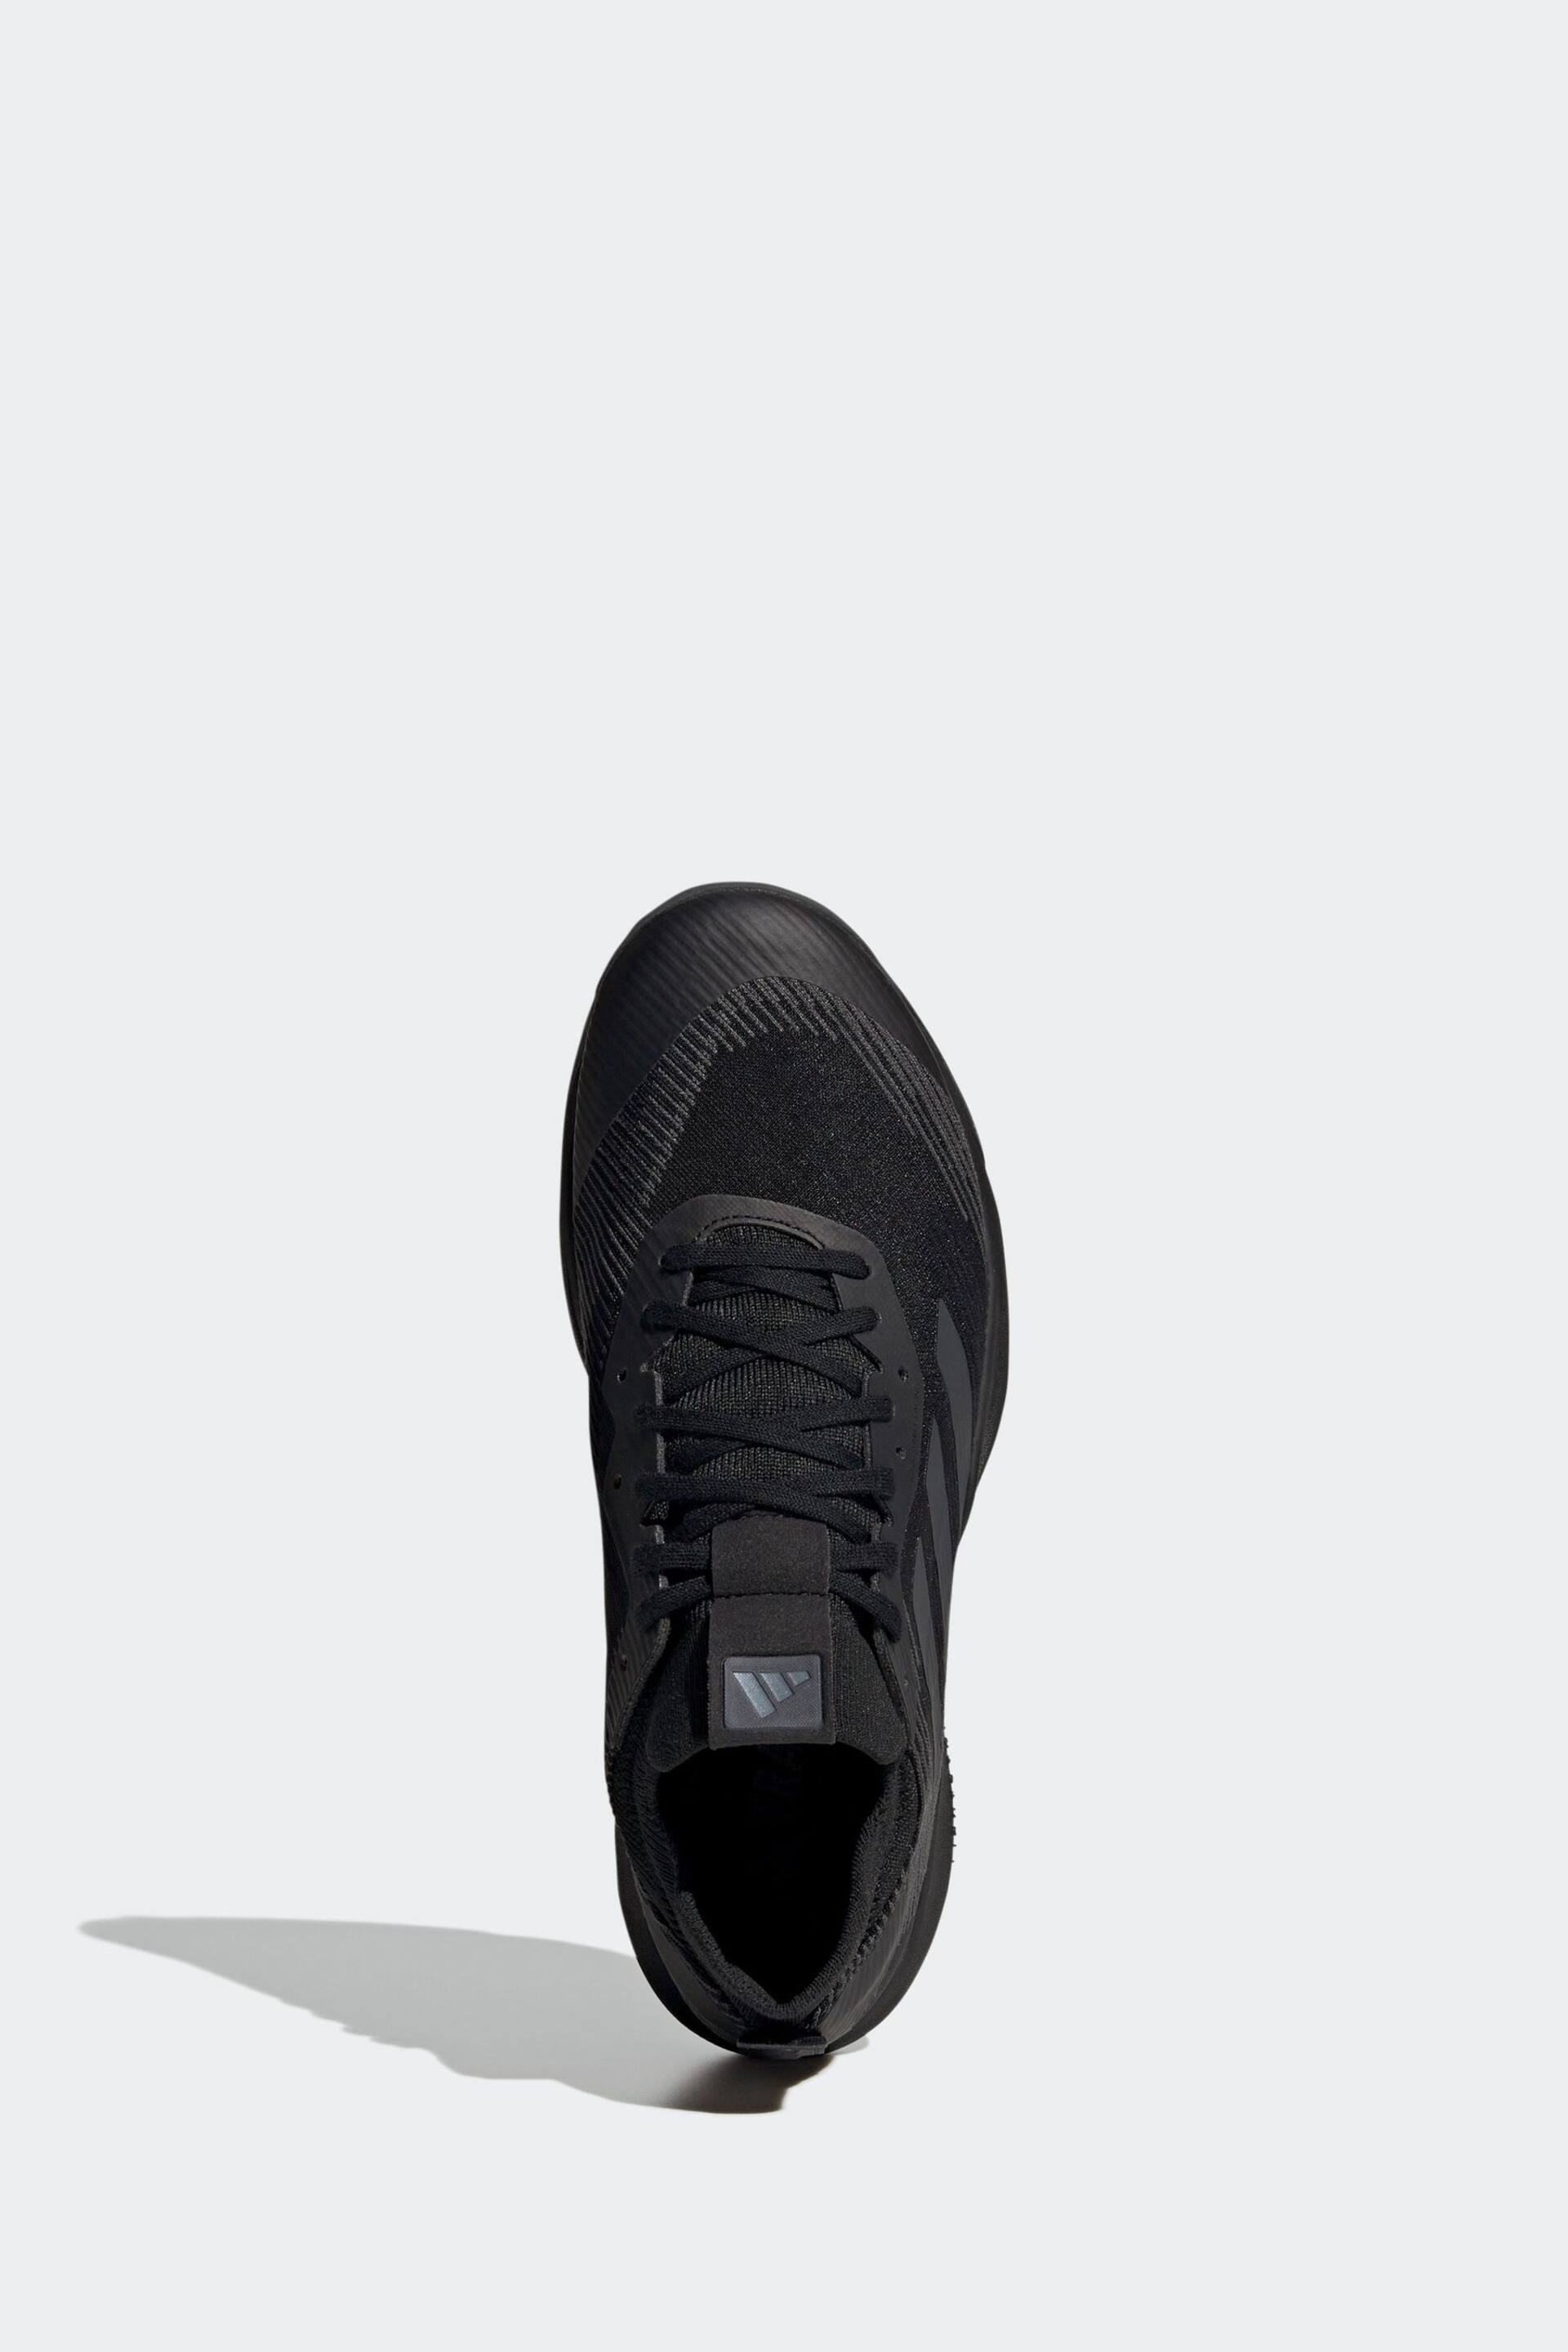 adidas Black Rapidmove Adv Trainers - Image 5 of 8